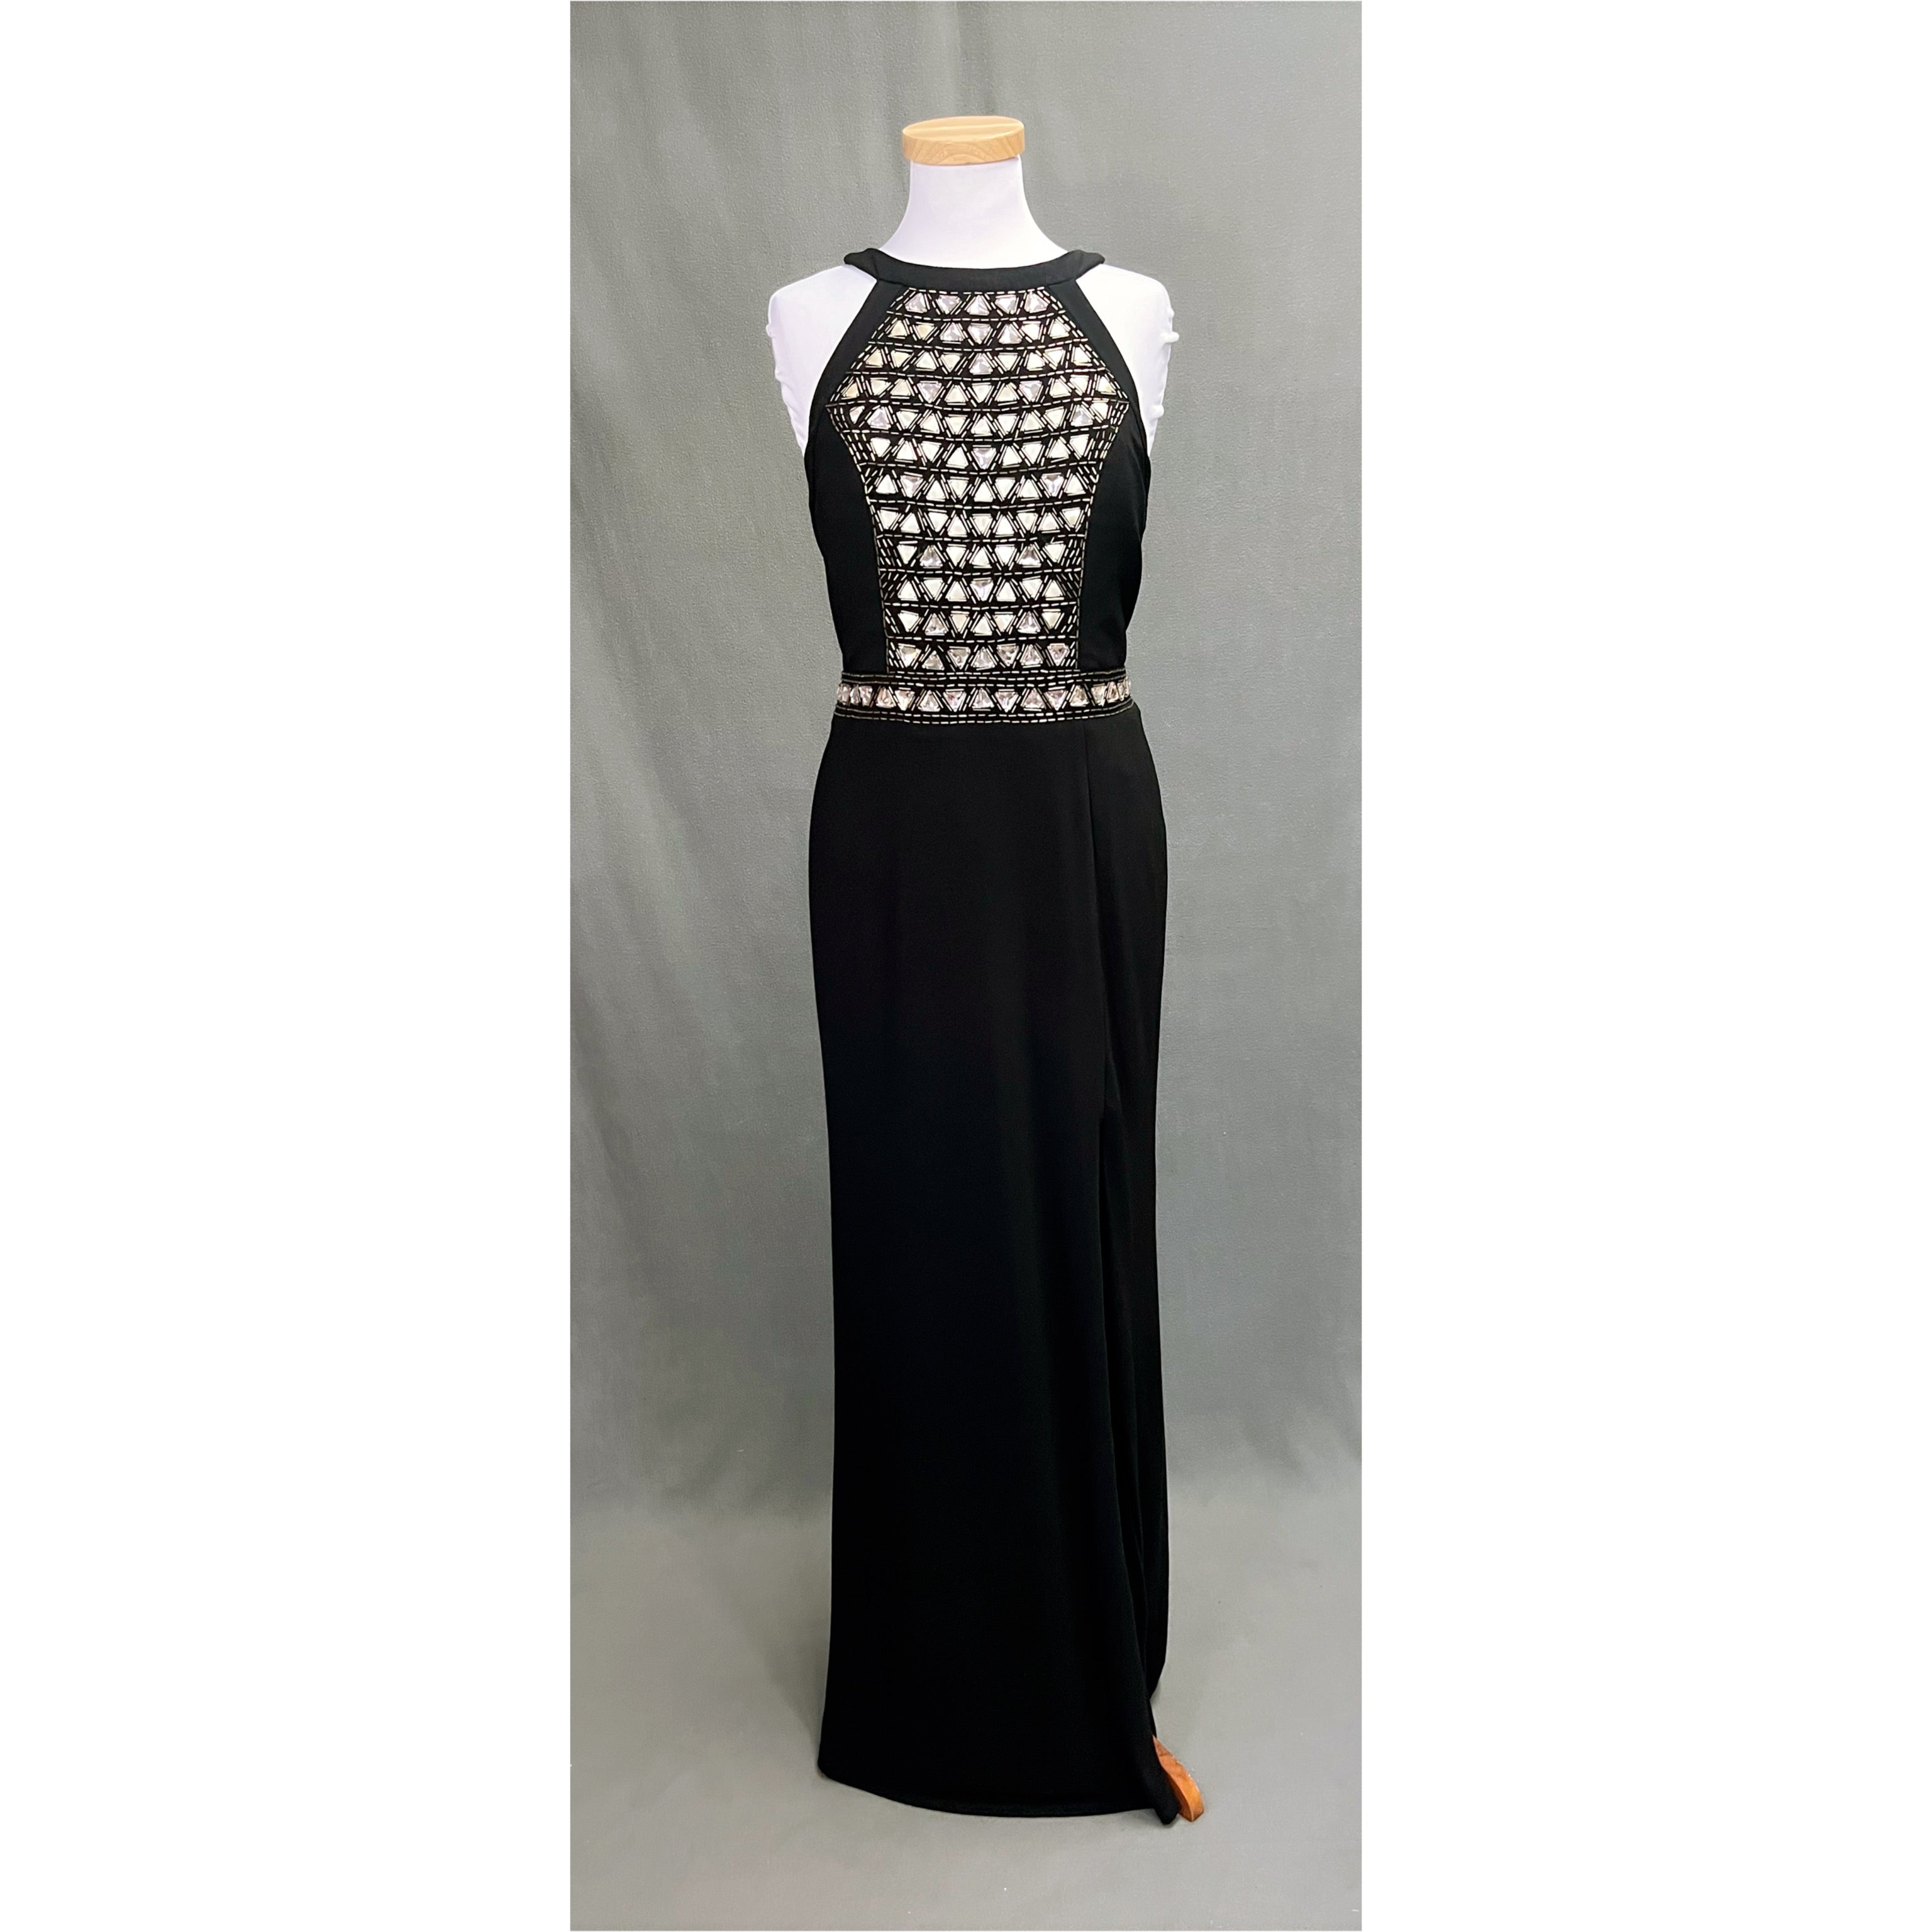 Patra black dress, size 12